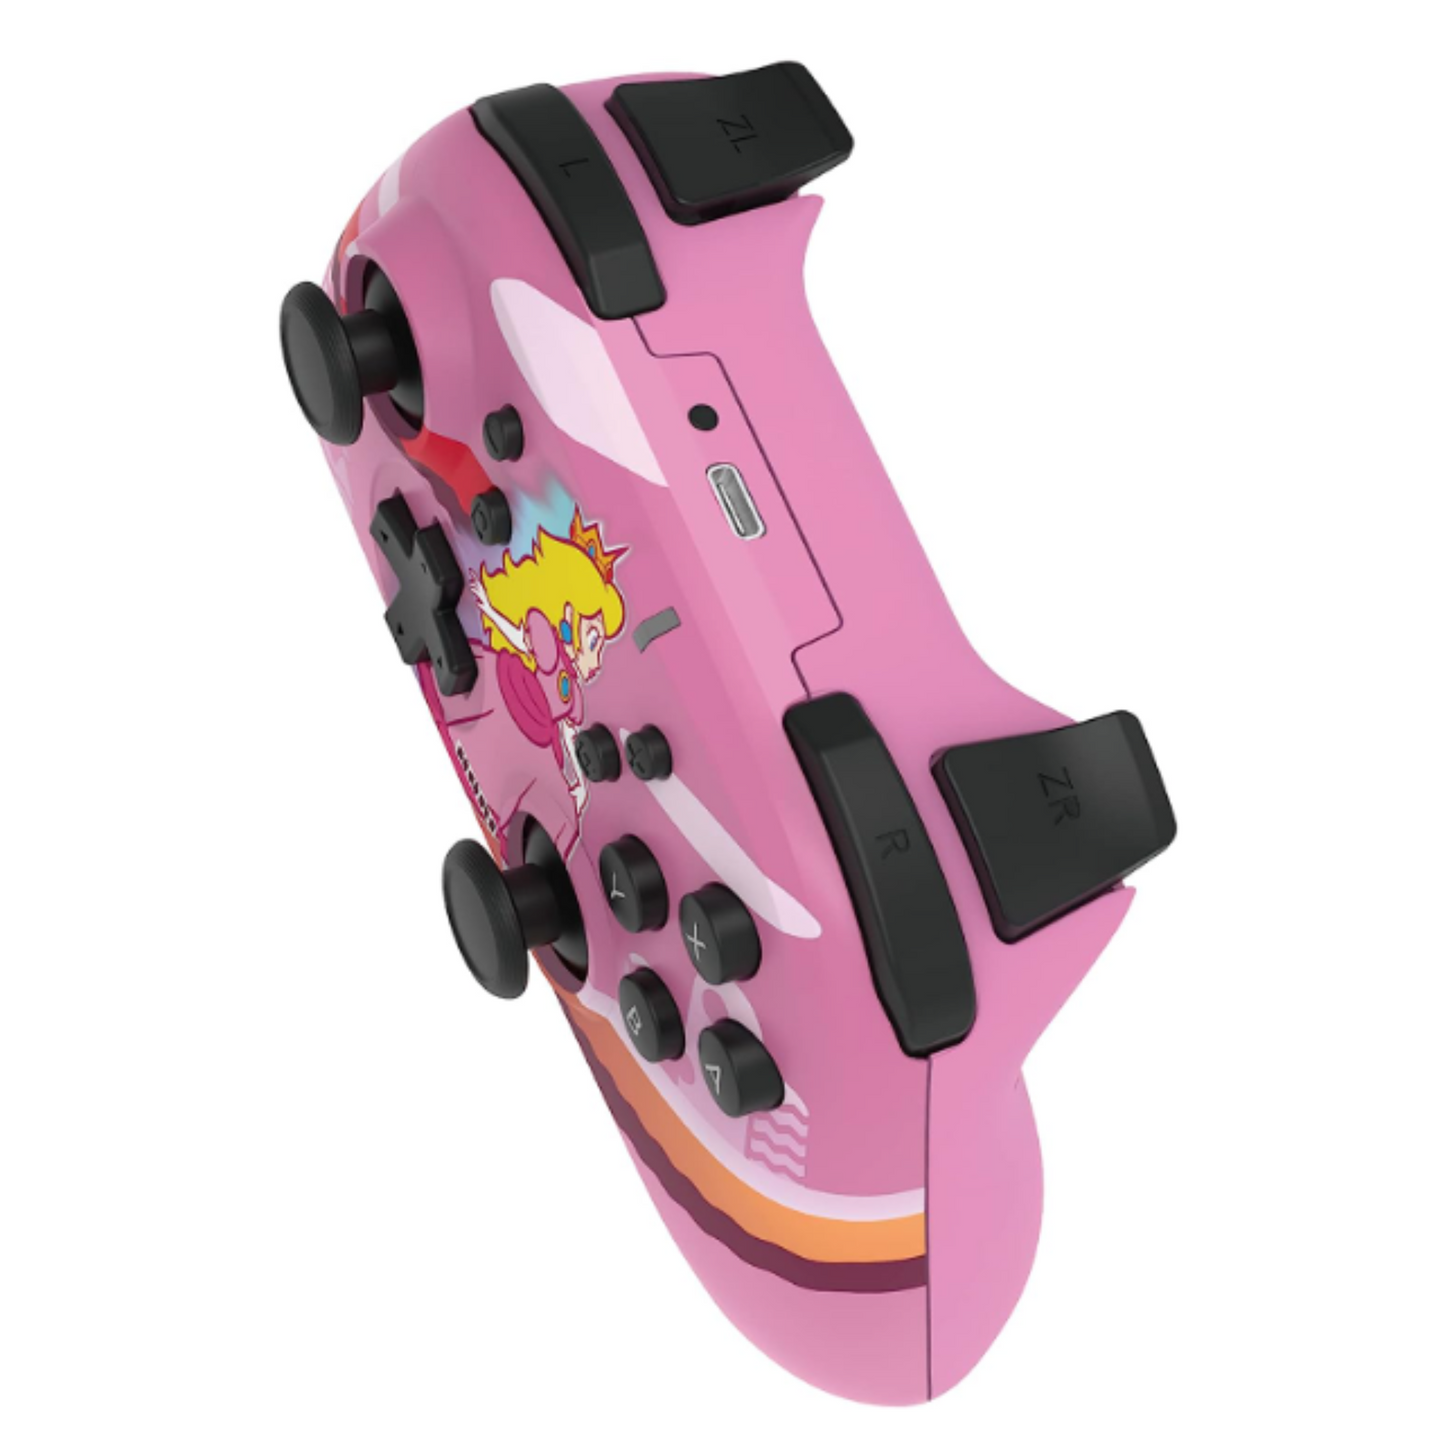 HORI Wireless Horipad Controller (Peach) for Nintendo Switch